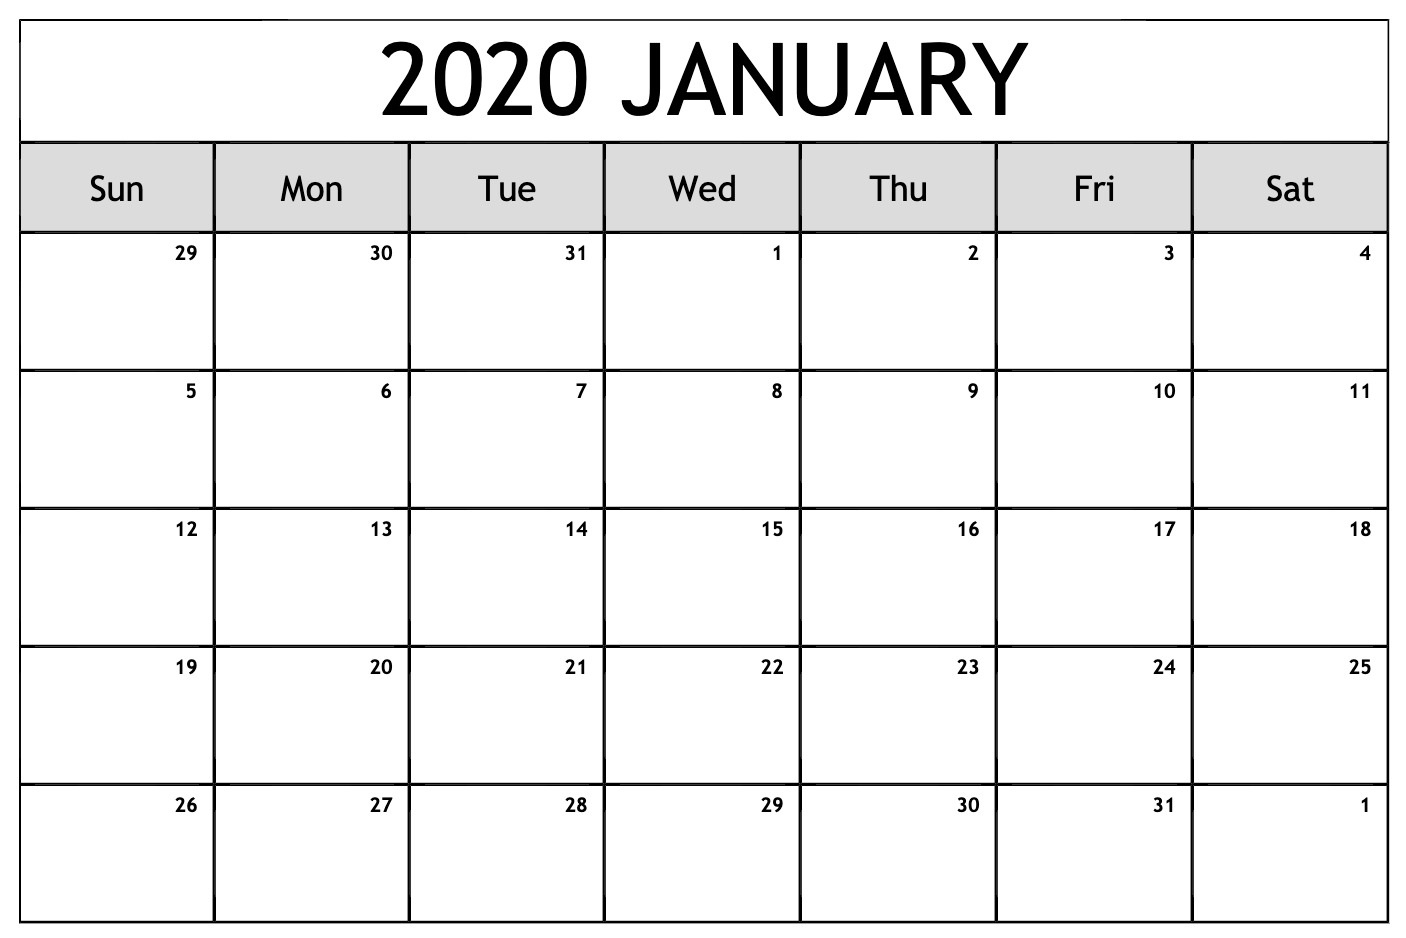 January 2020 Planner Calendar Excel